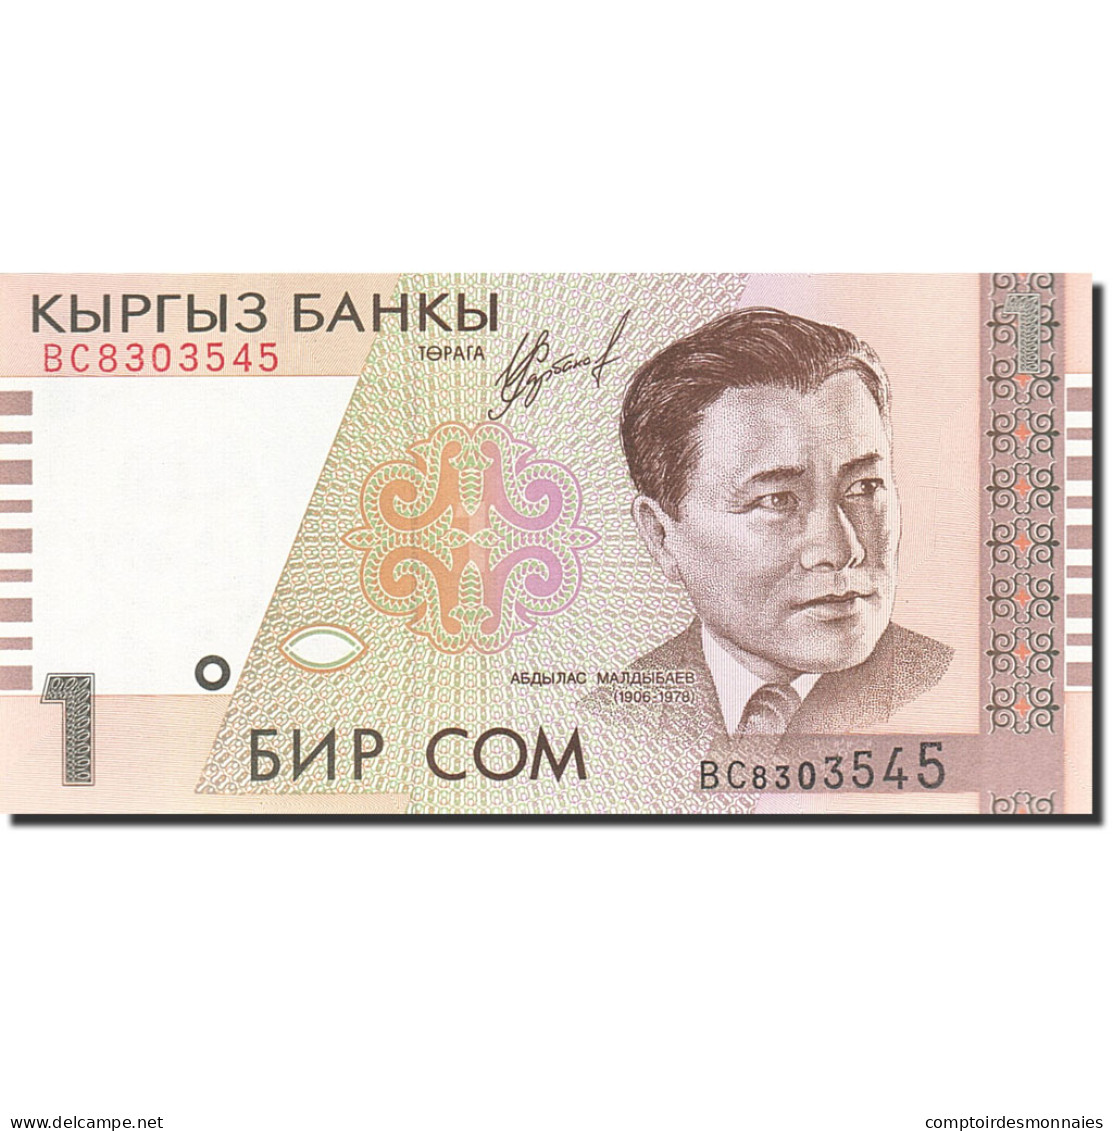 Billet, KYRGYZSTAN, 1 Som, 2000, 1999, KM:15, NEUF - Kirghizistan